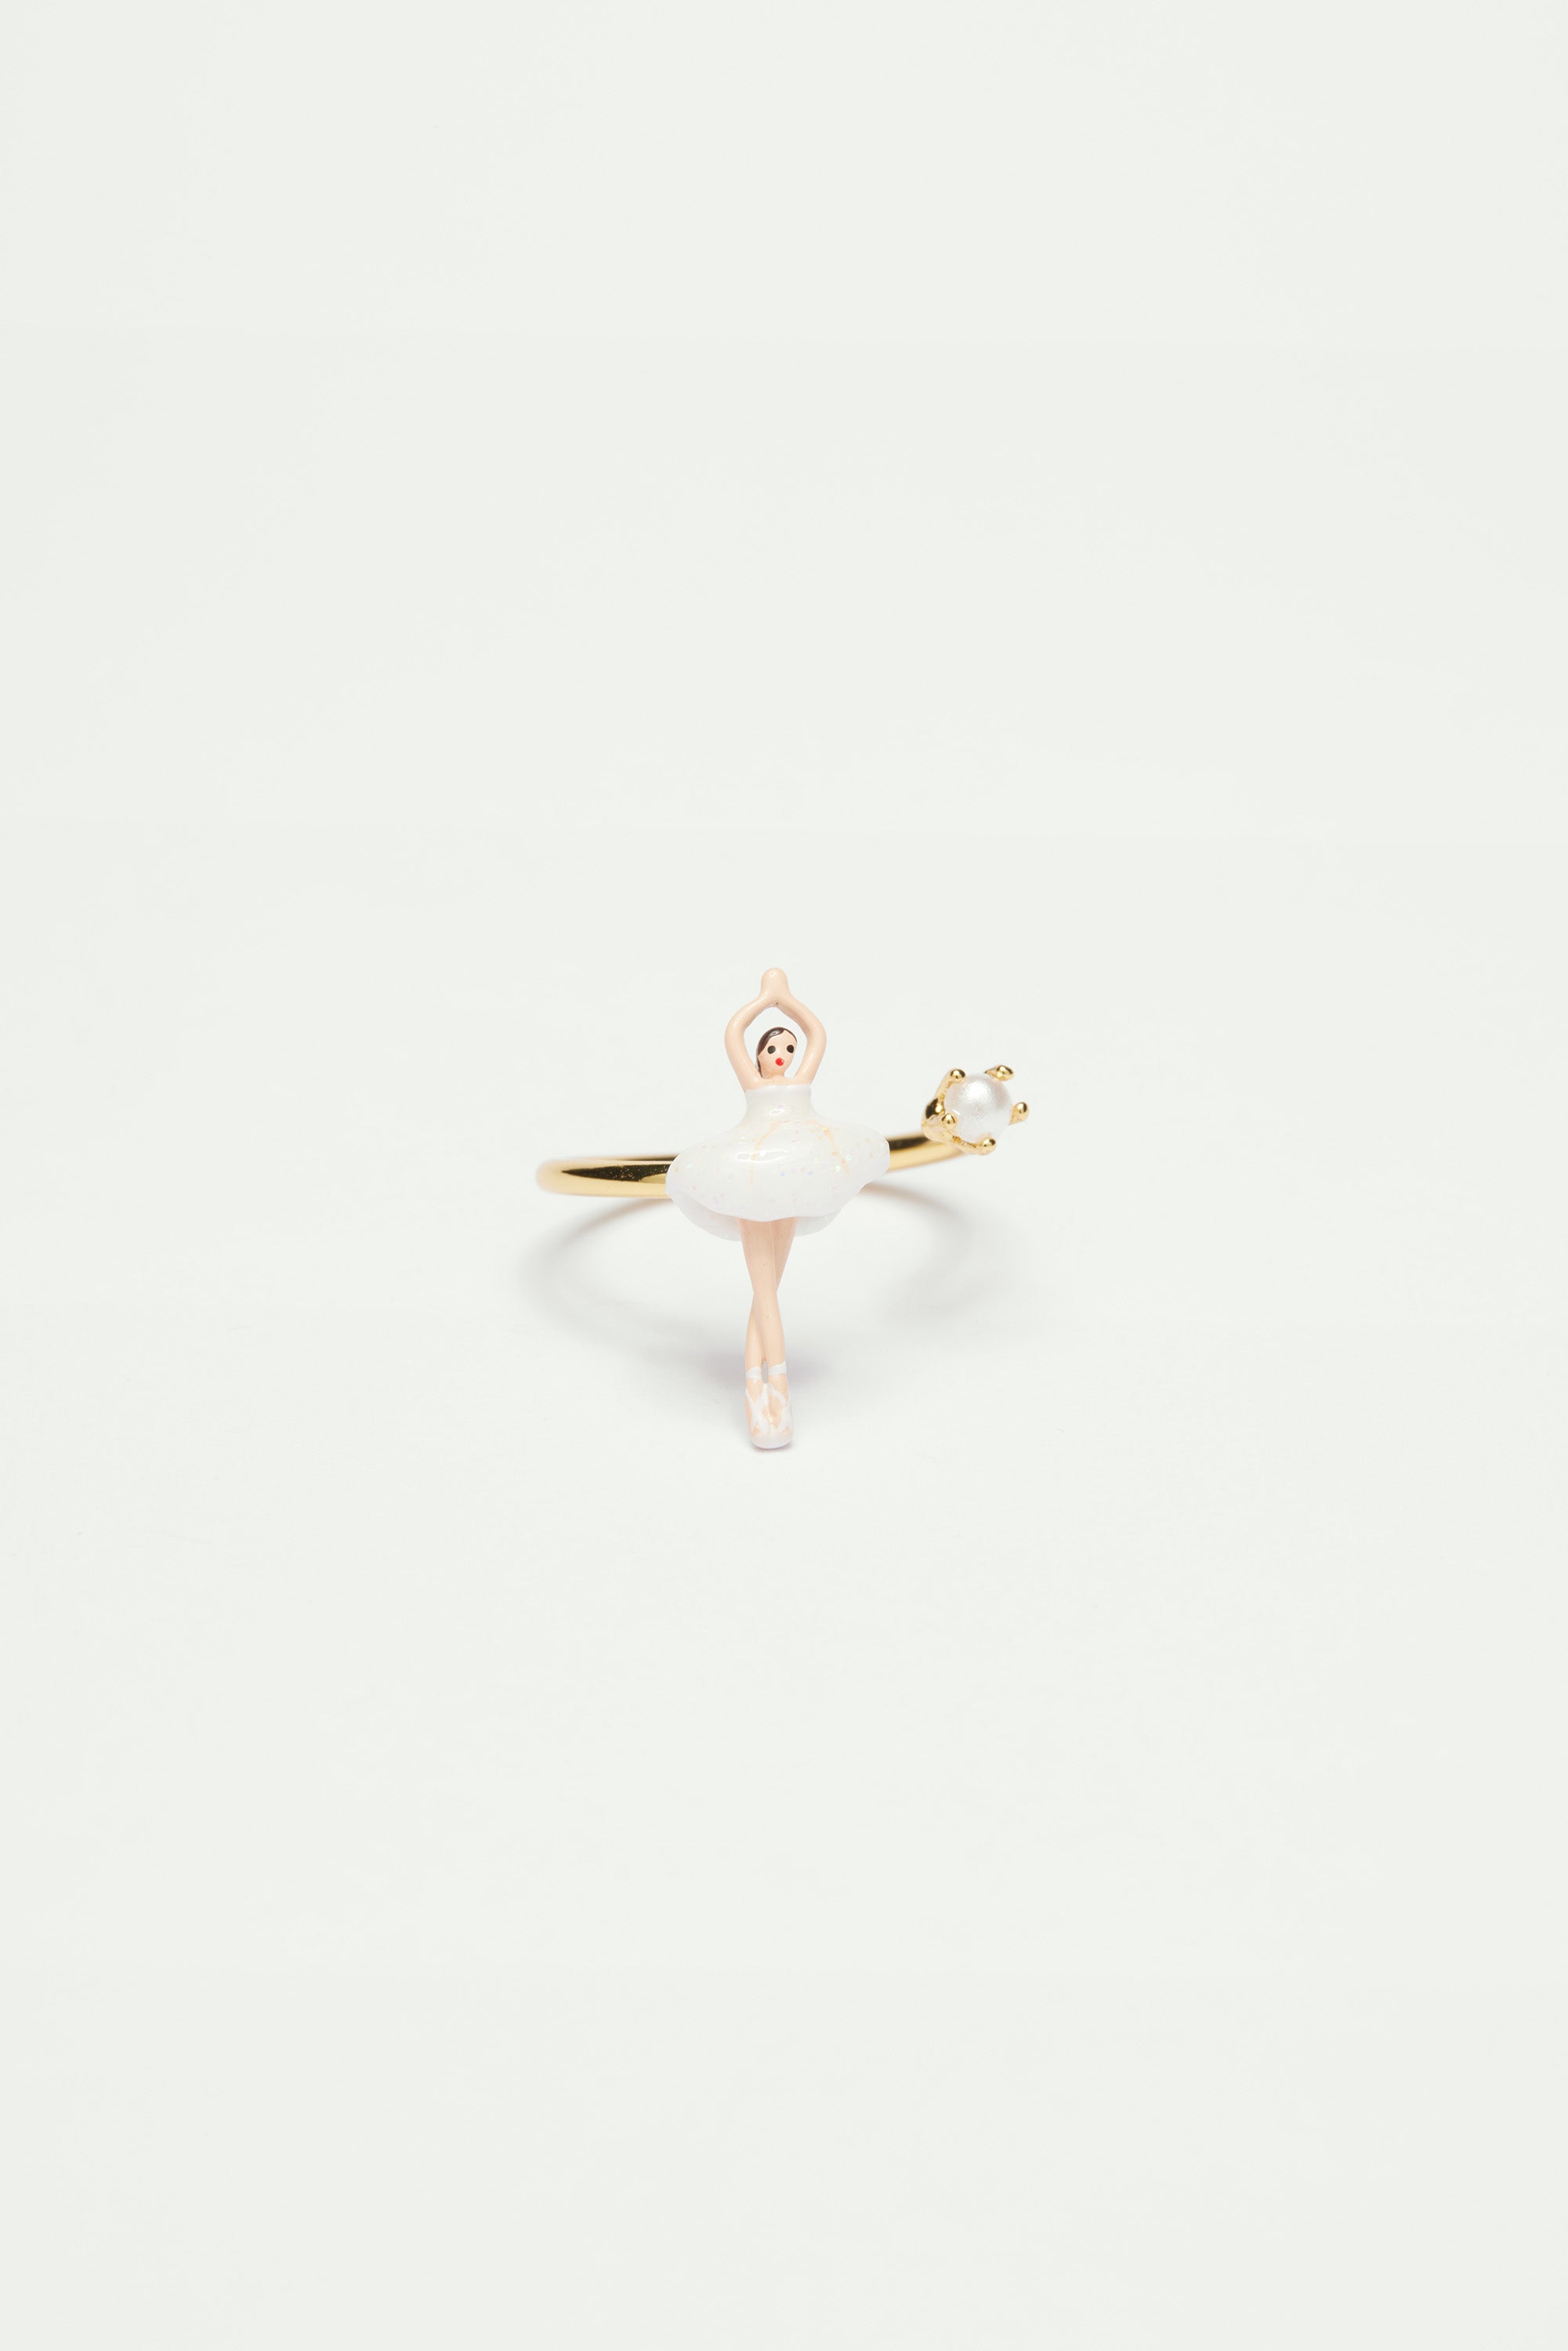 Anillo regulable mini bailarina con tutú blanco